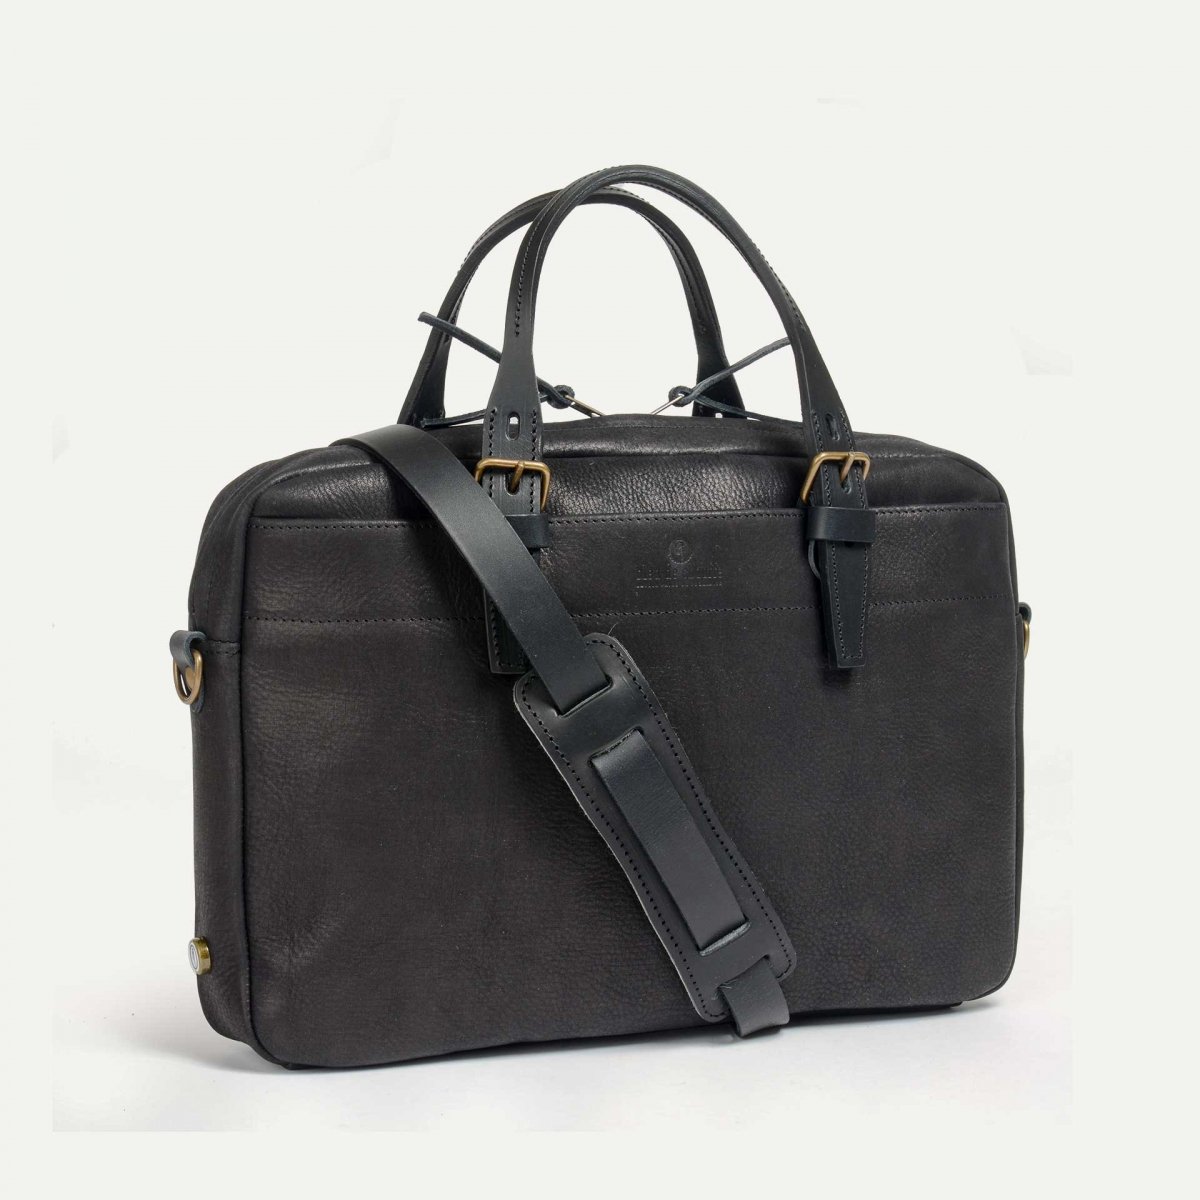 Folder Business bag - Charcoal black / Waxed Leather (image n°2)